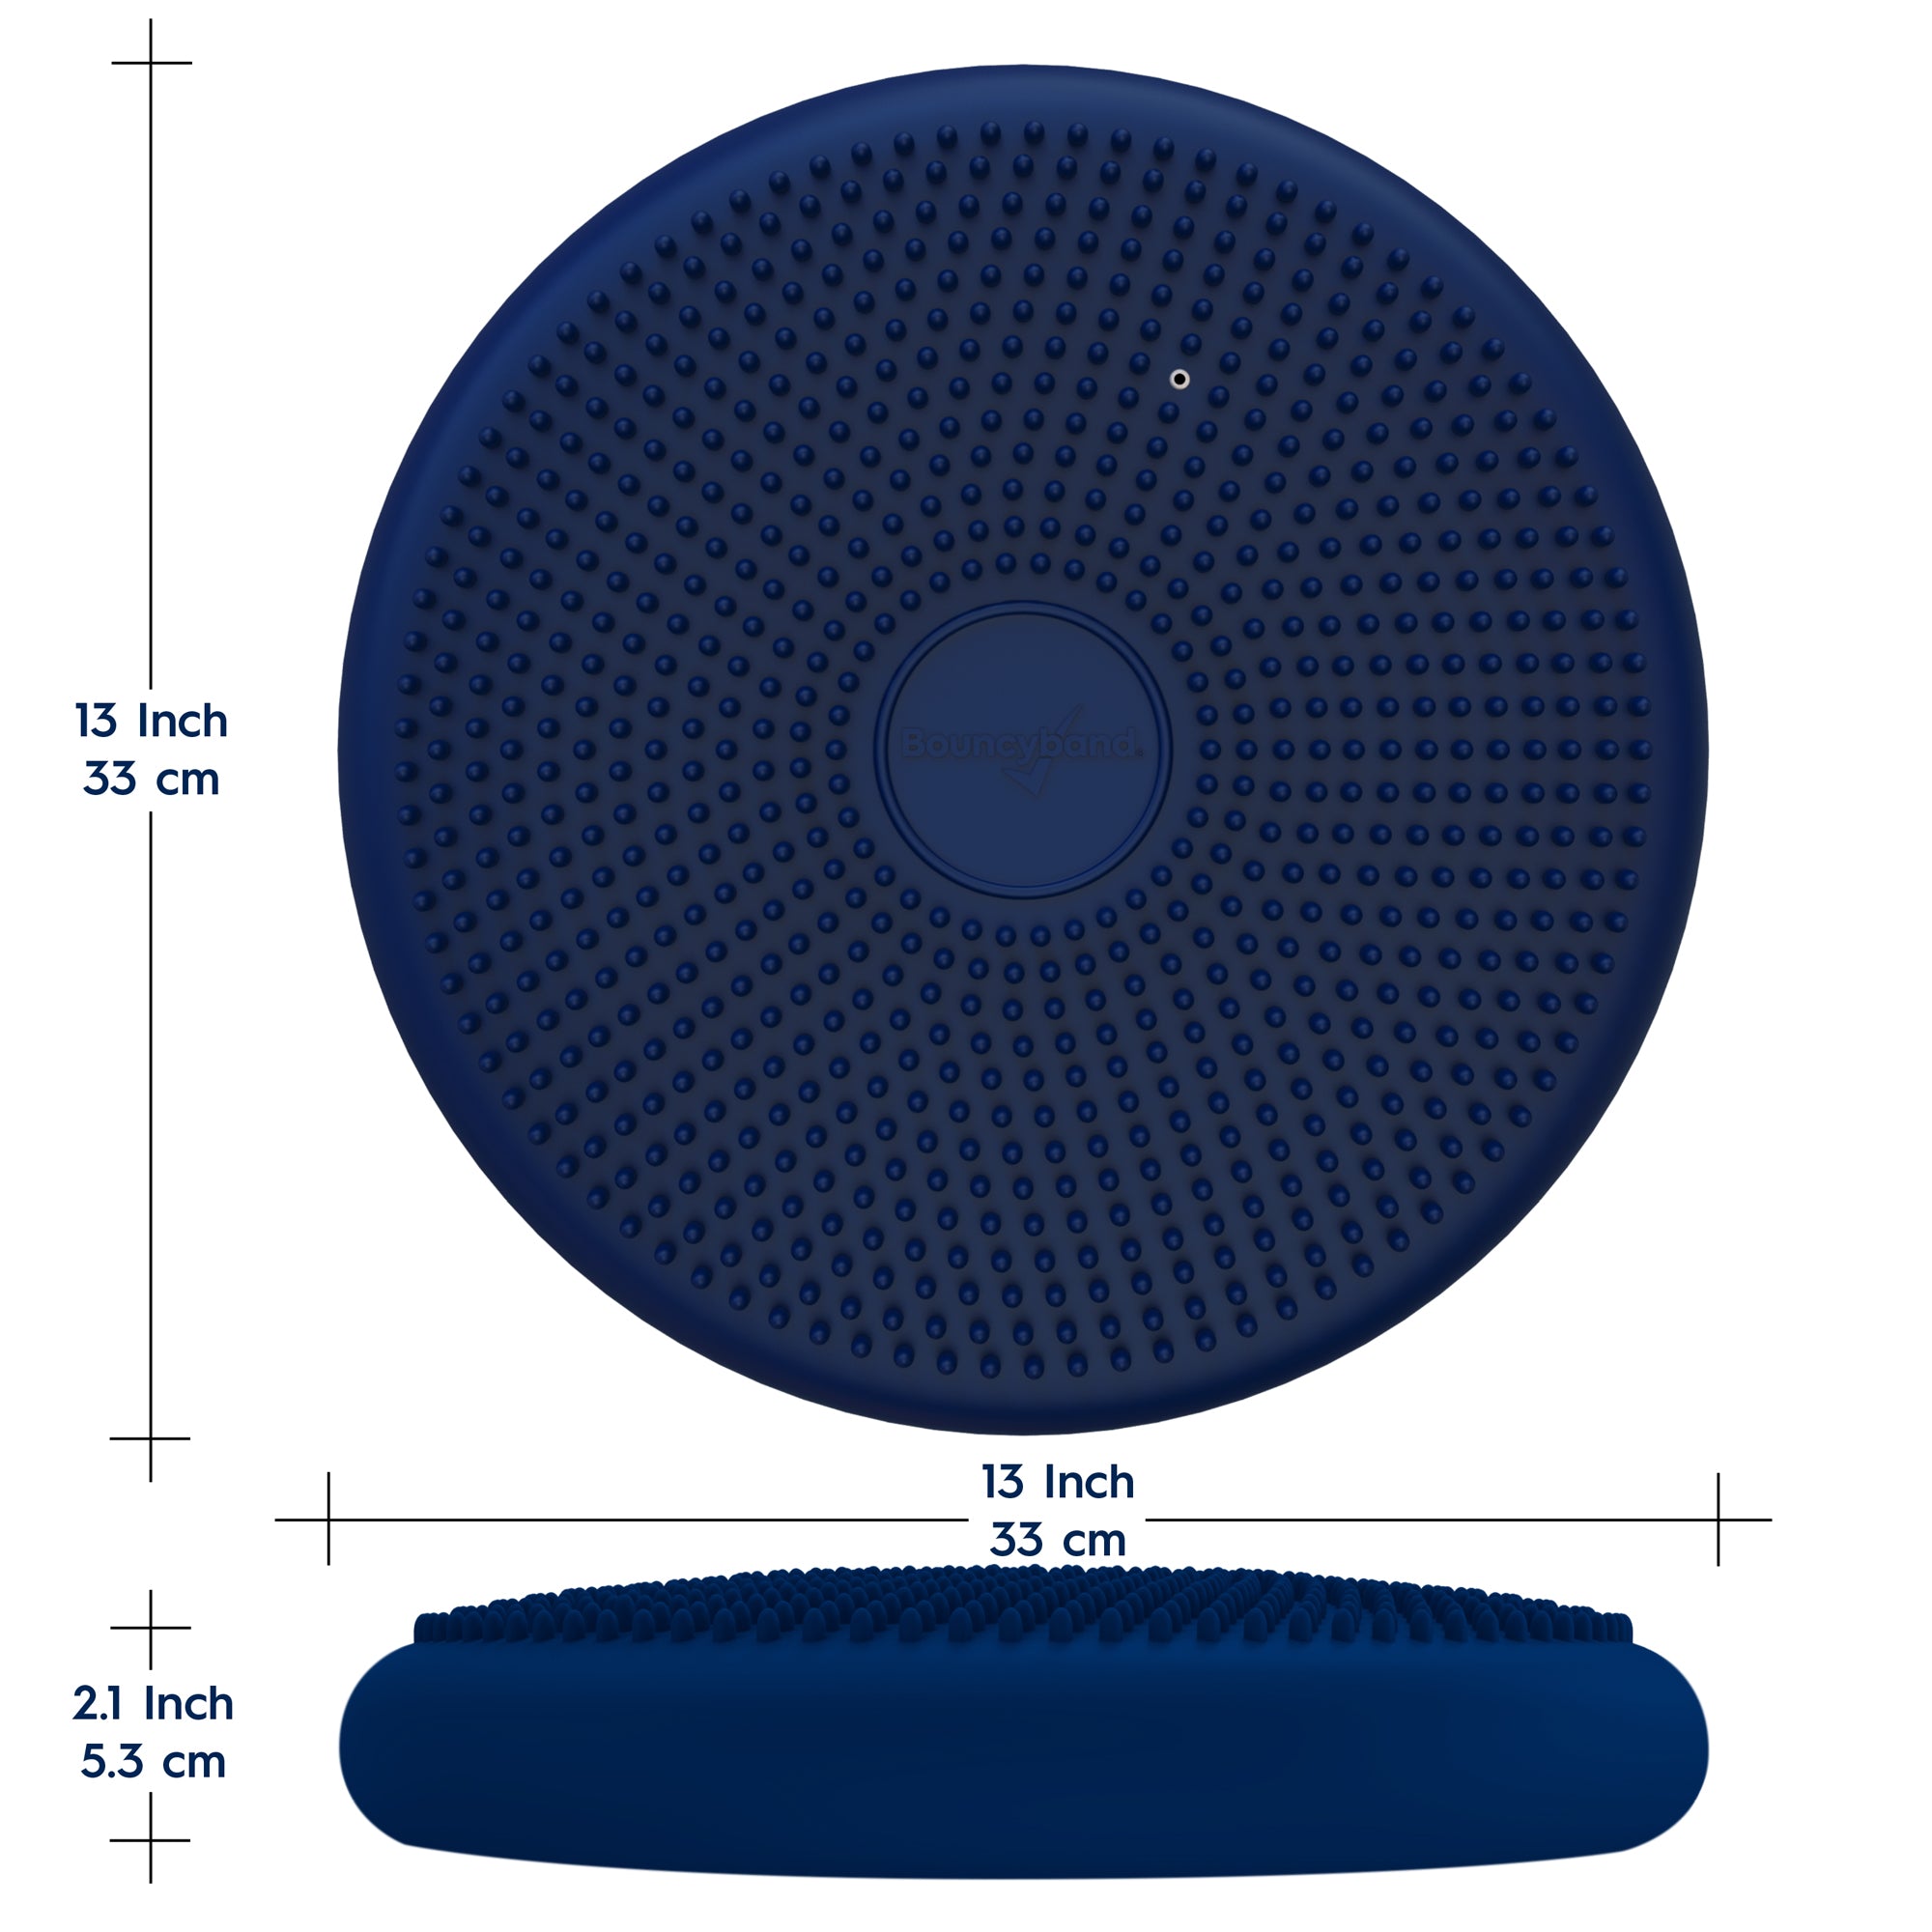 BouncyBand® Antimicrobial Wiggle Seat Sensory Cushion-Blue 33cm